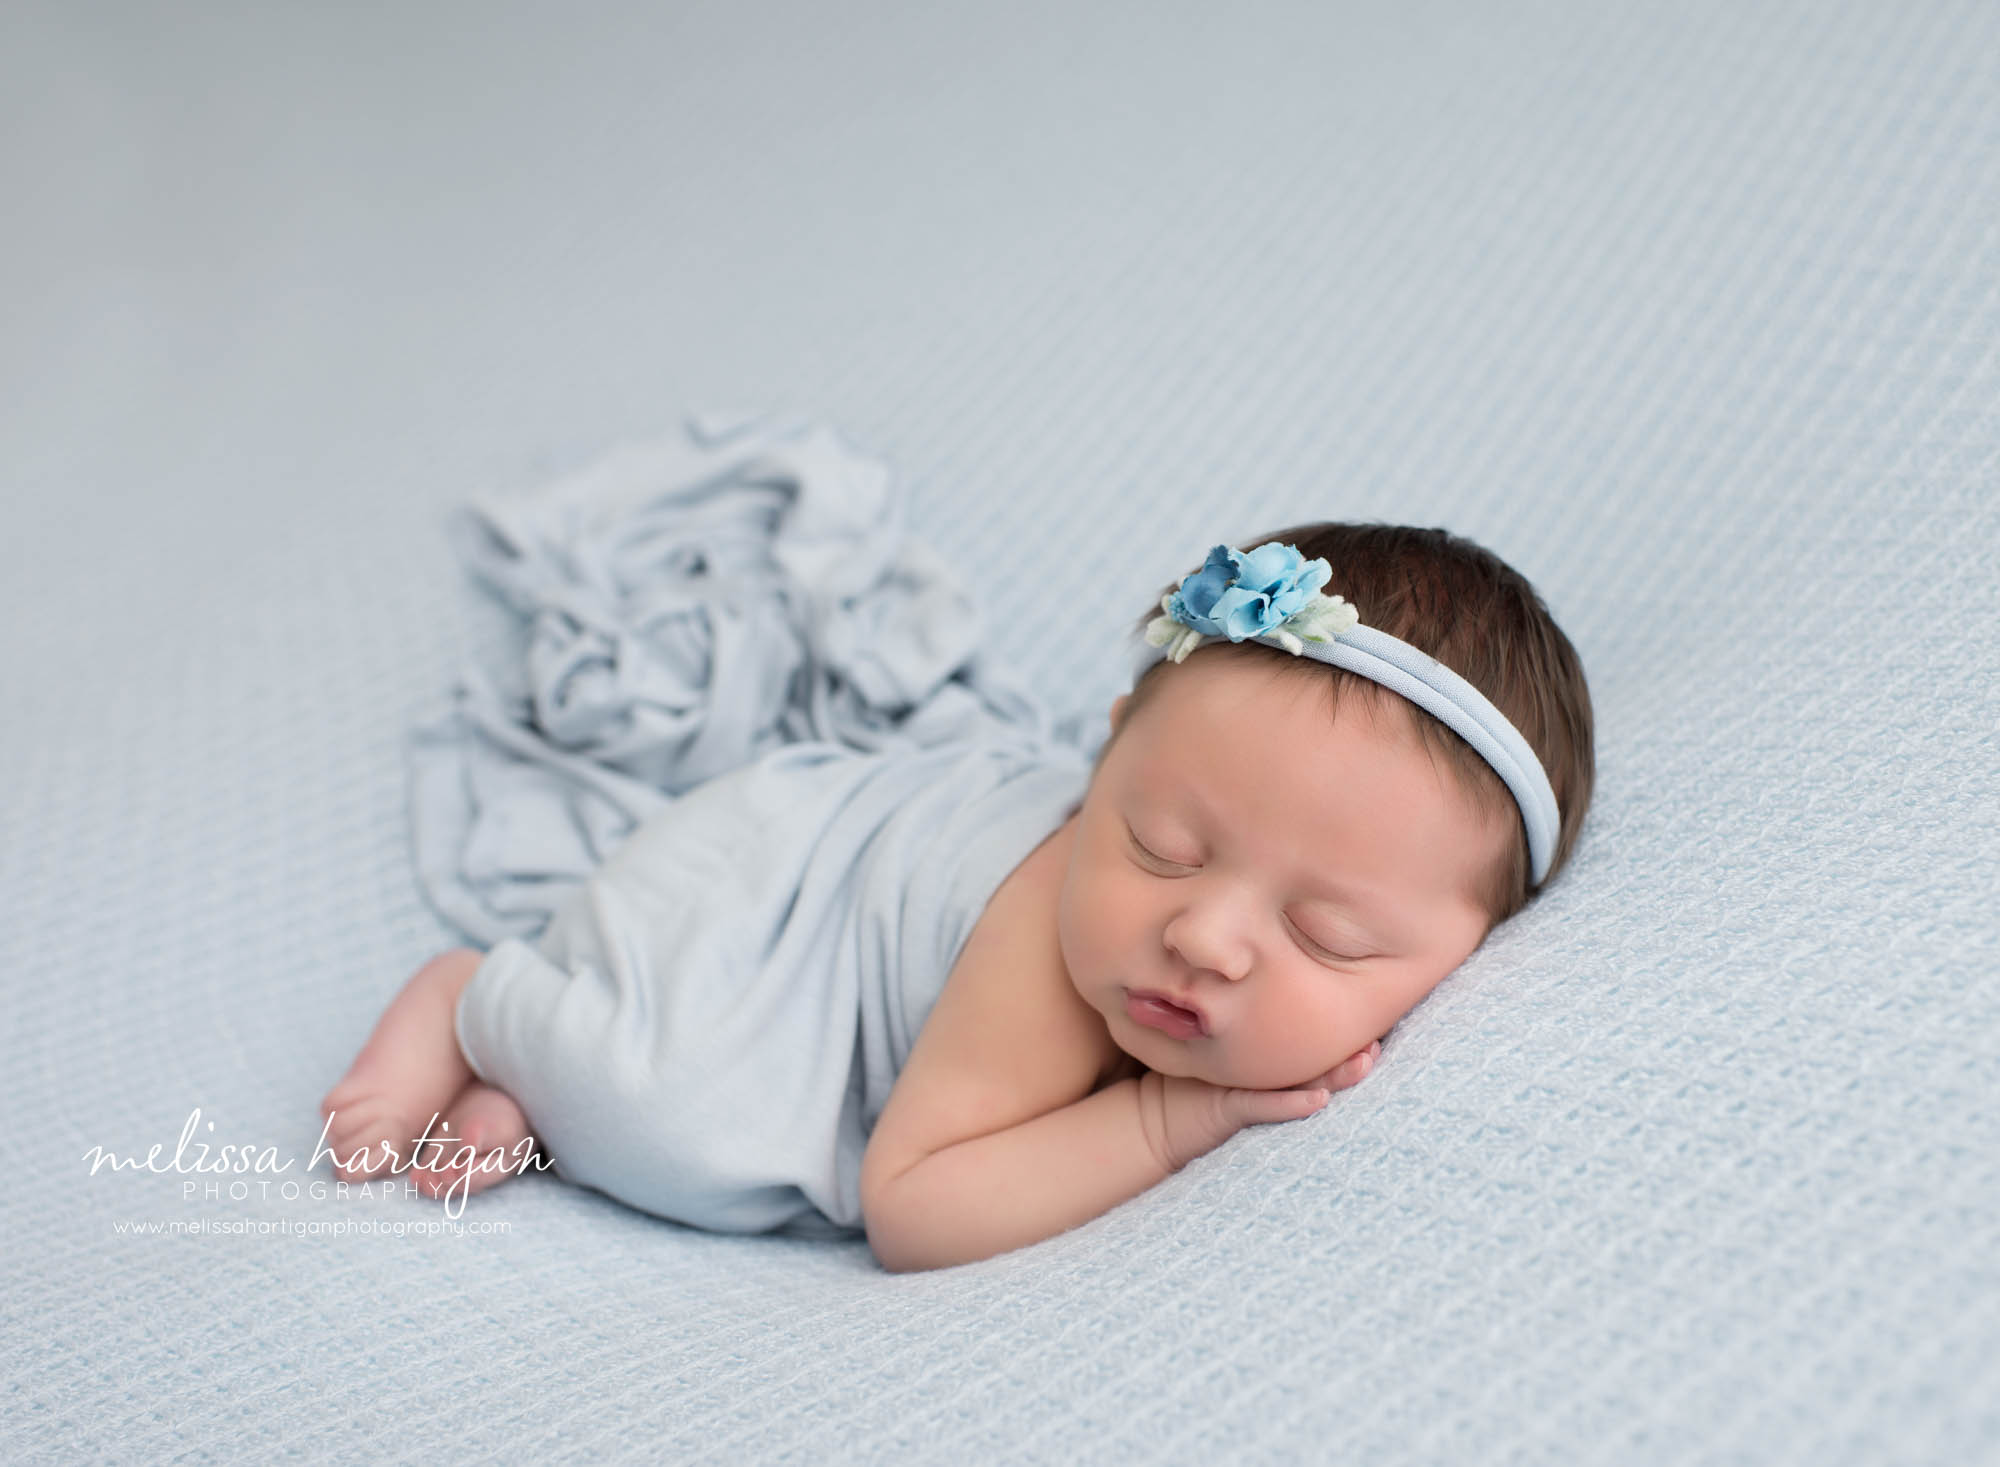 Leila CT Newborn Session baby girl sleeping on blue blanket